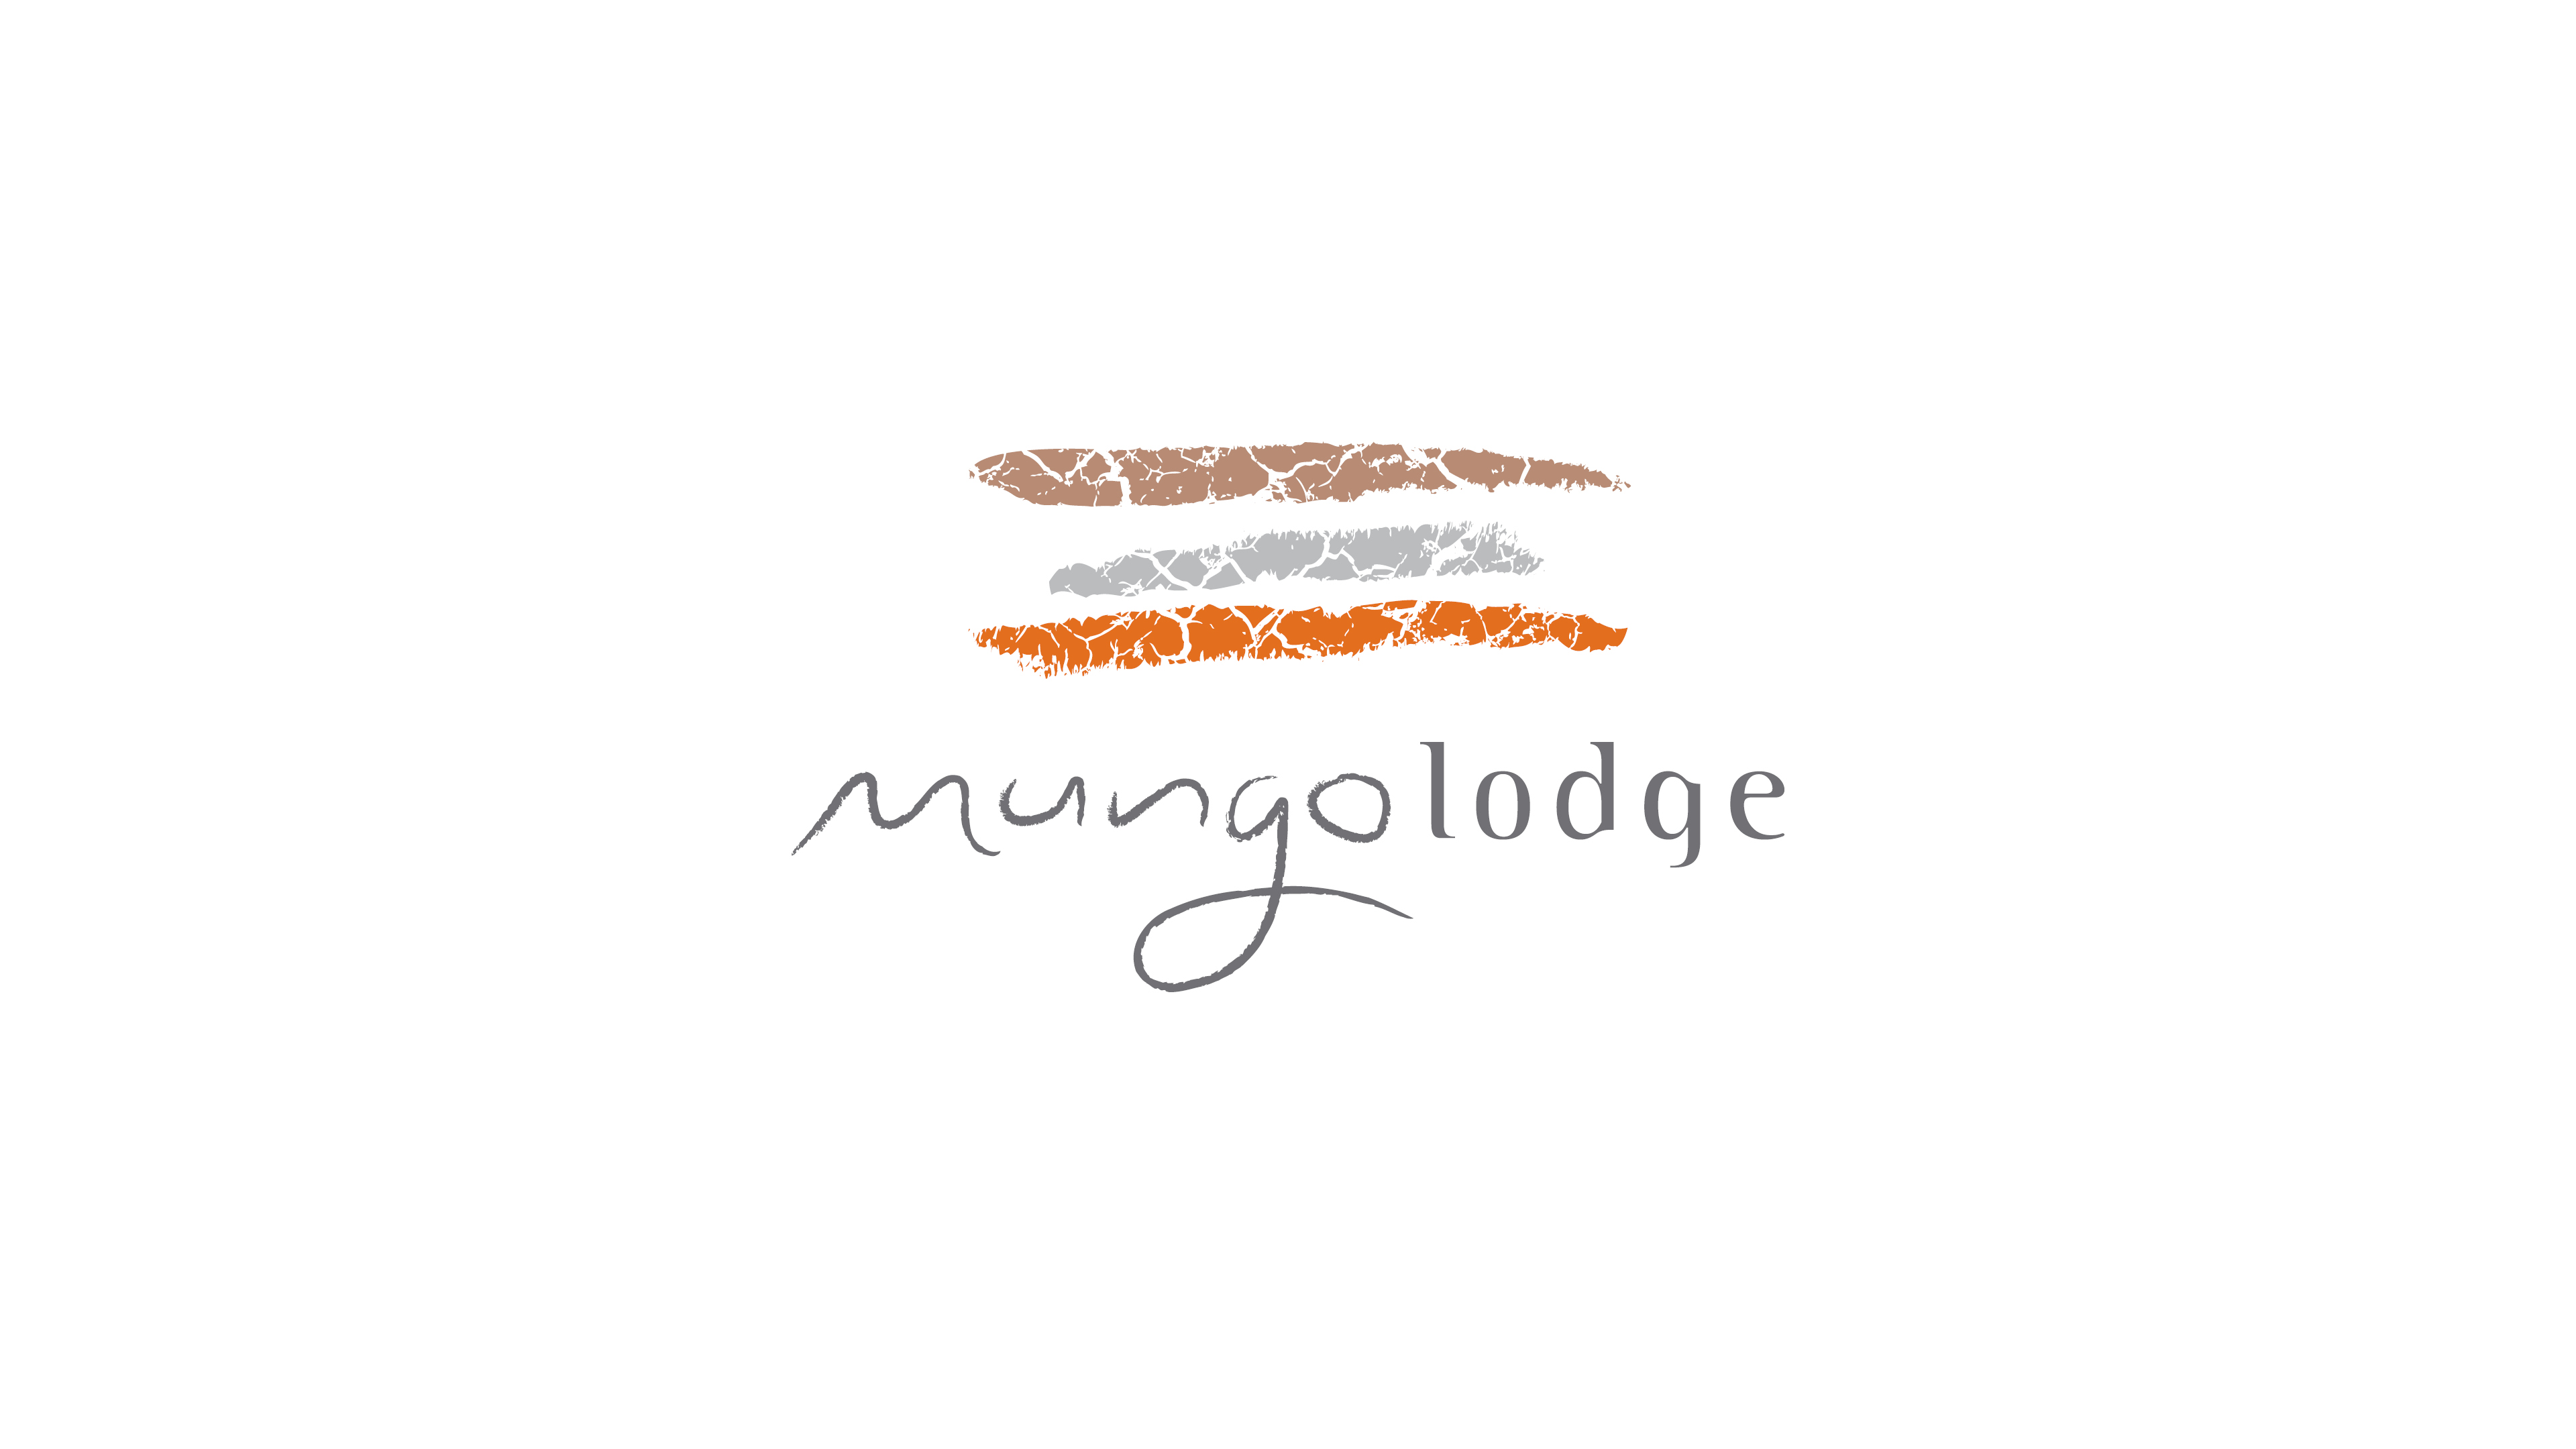 Mungo Lodge Logo and Branding Design - Saunders Design Group